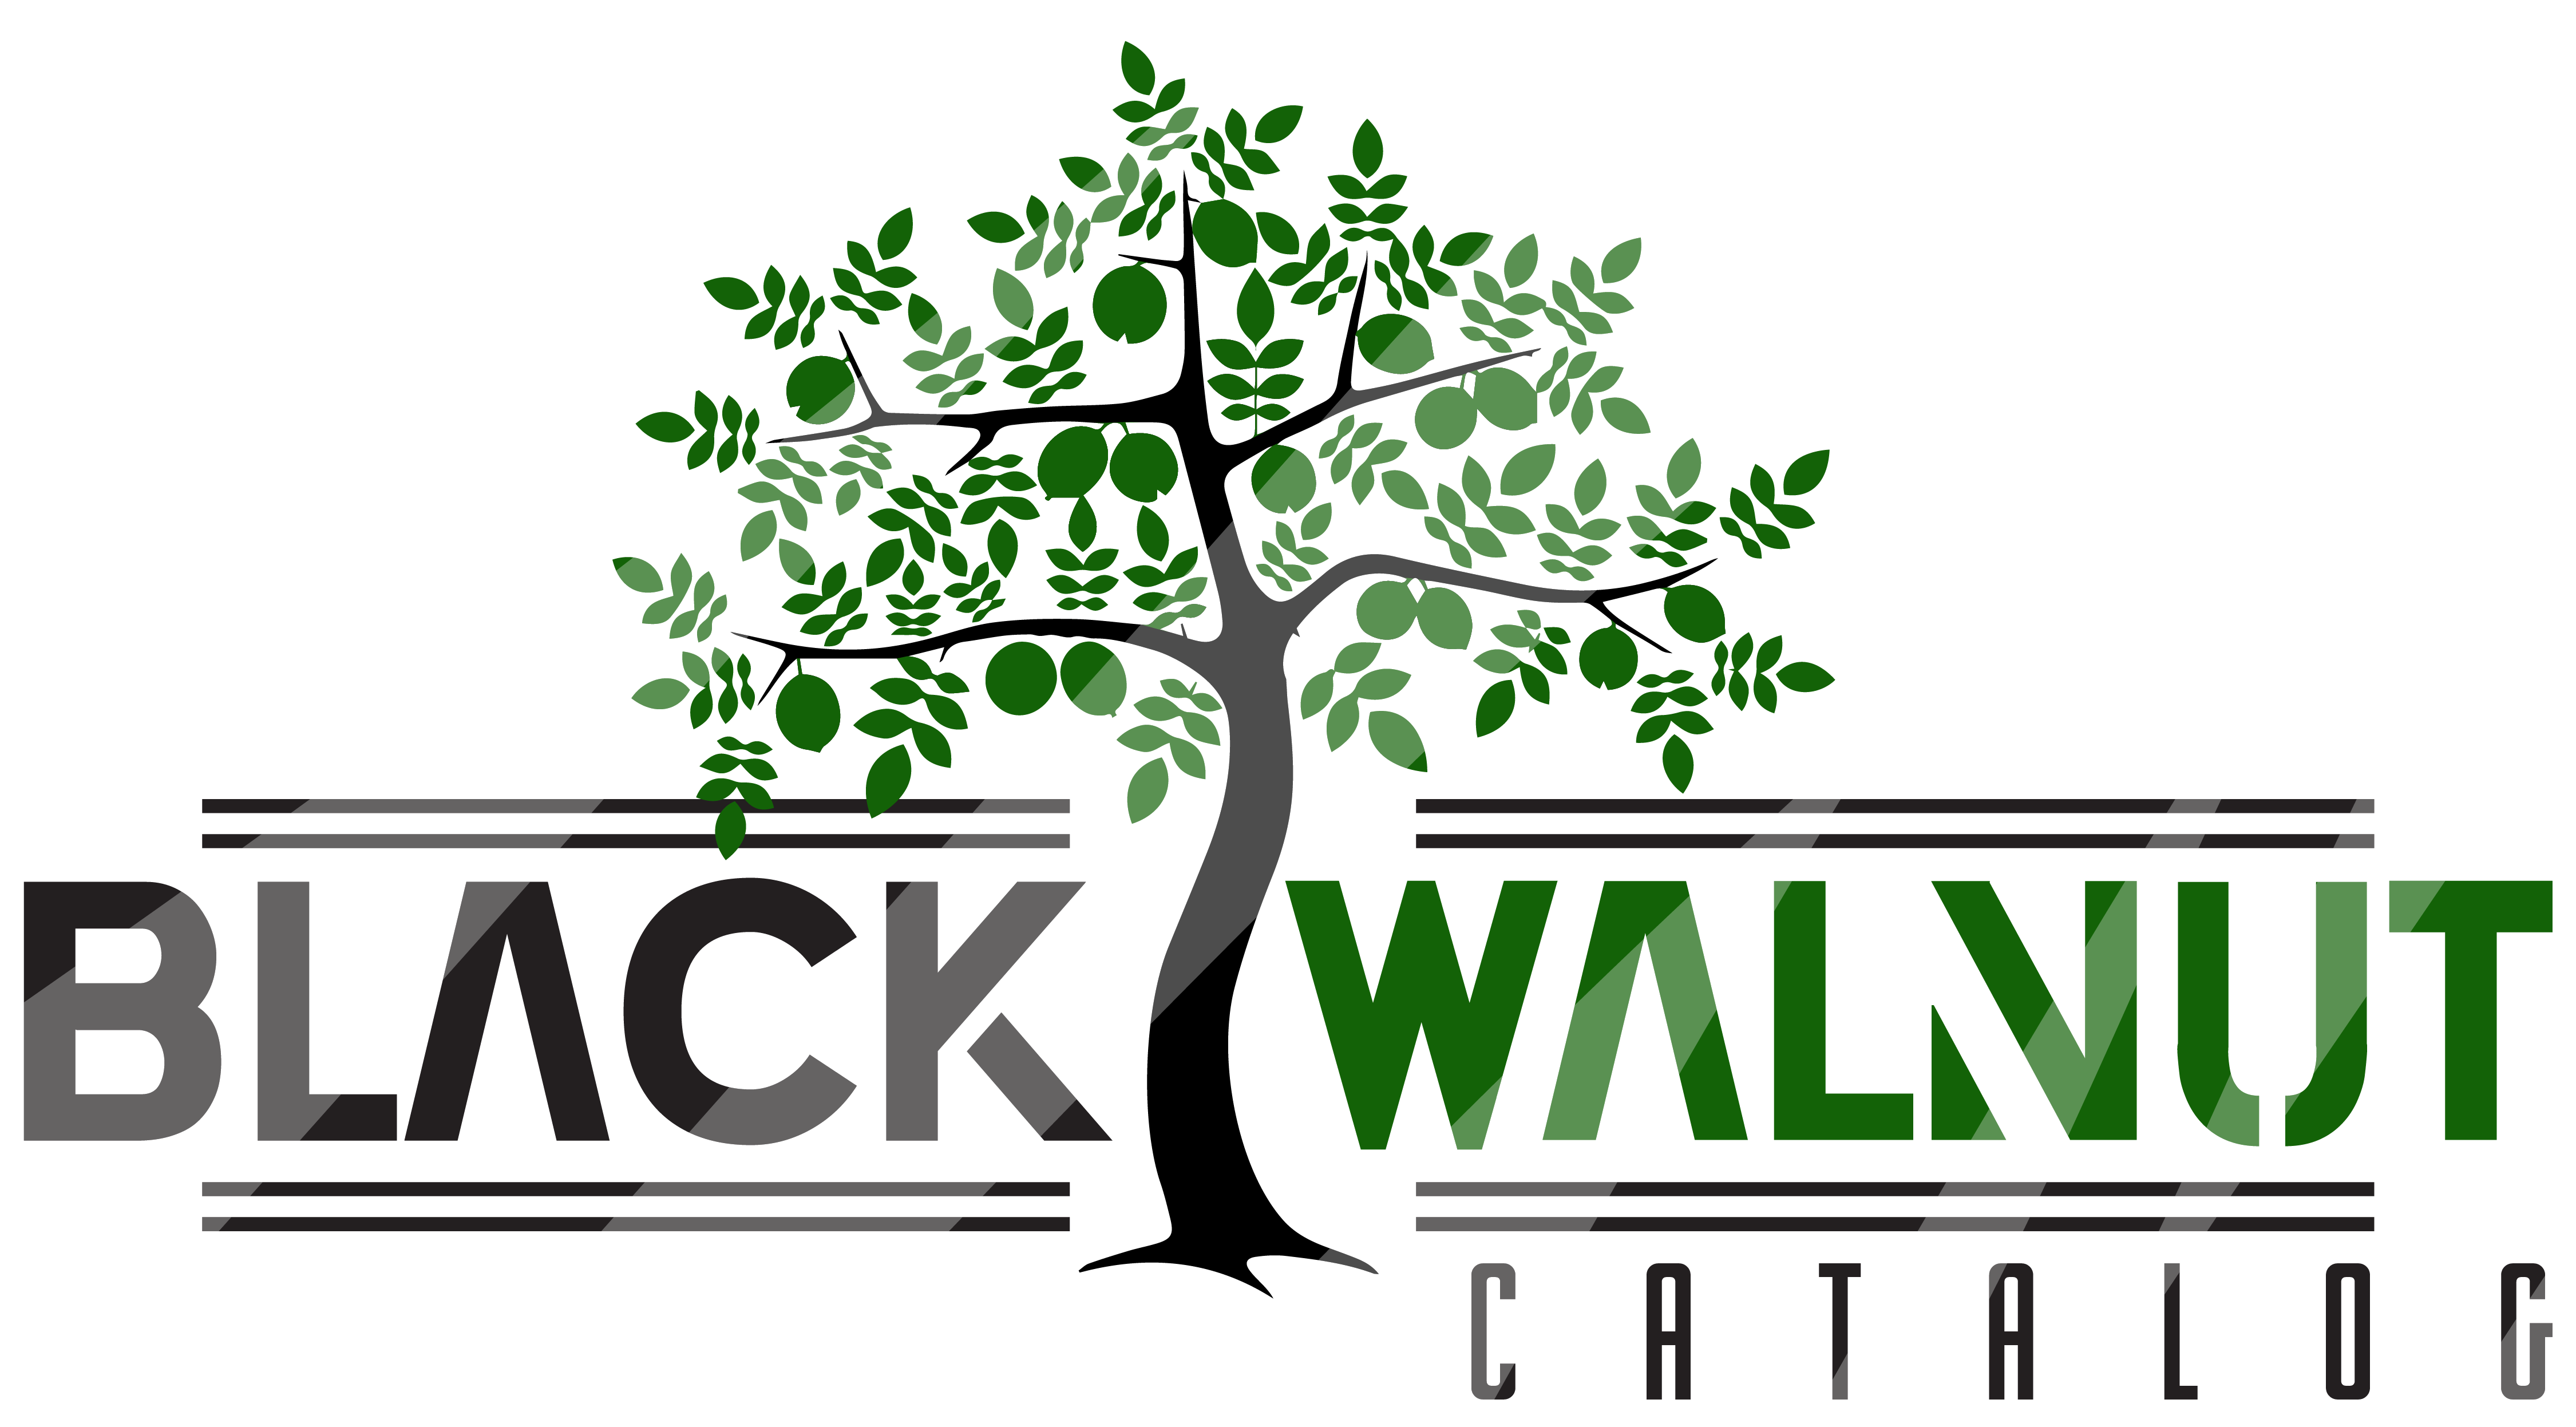 black walnut catalog logo colored